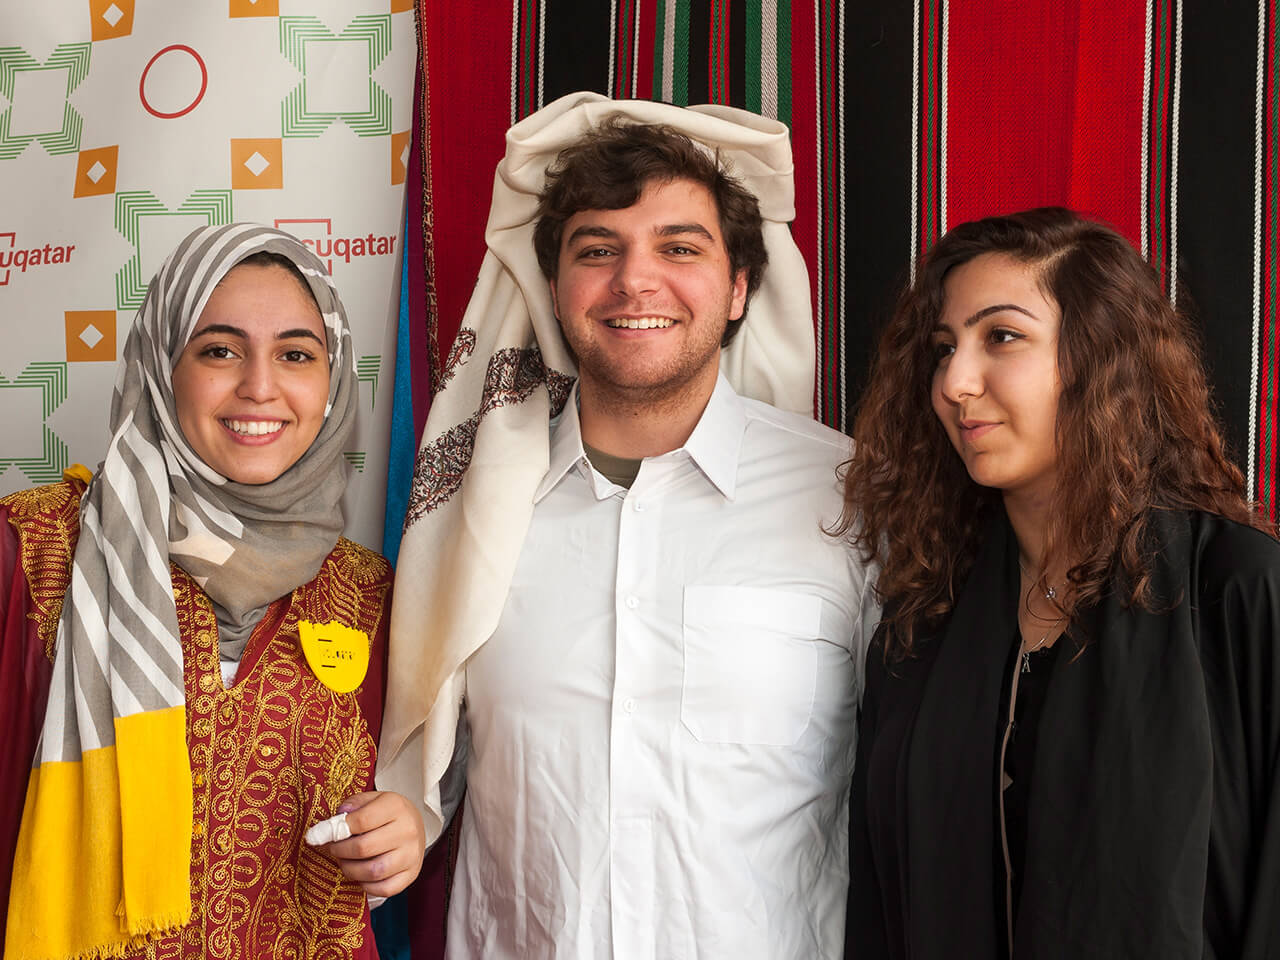 Students explore Qatari culture and meet students from Qatar